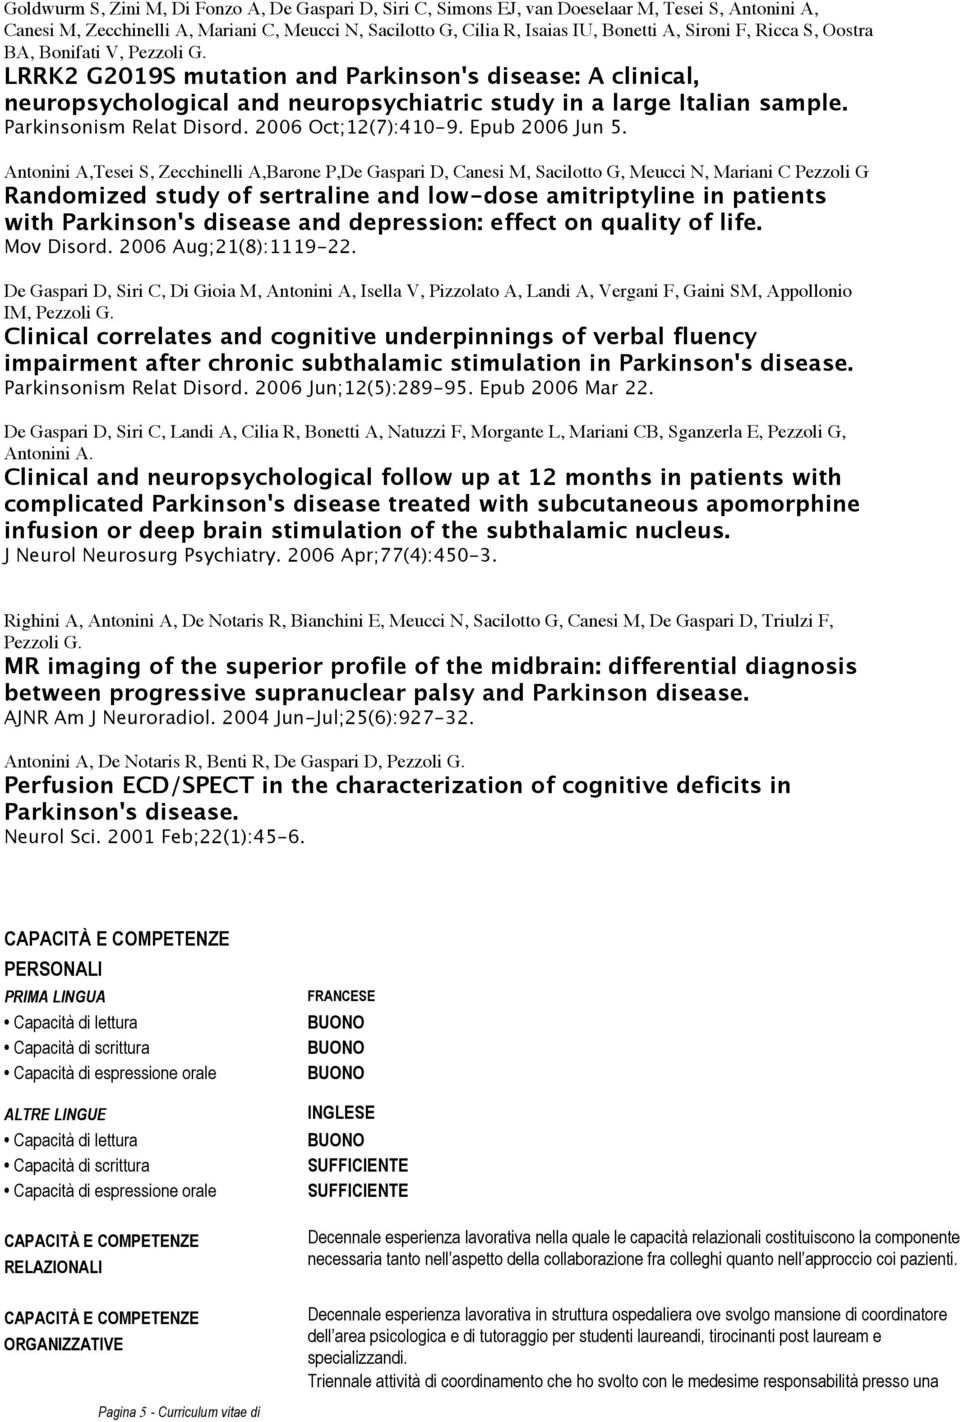 Parkinsonism Relat Disord. 2006 Oct;12(7):410-9. Epub 2006 Jun 5.